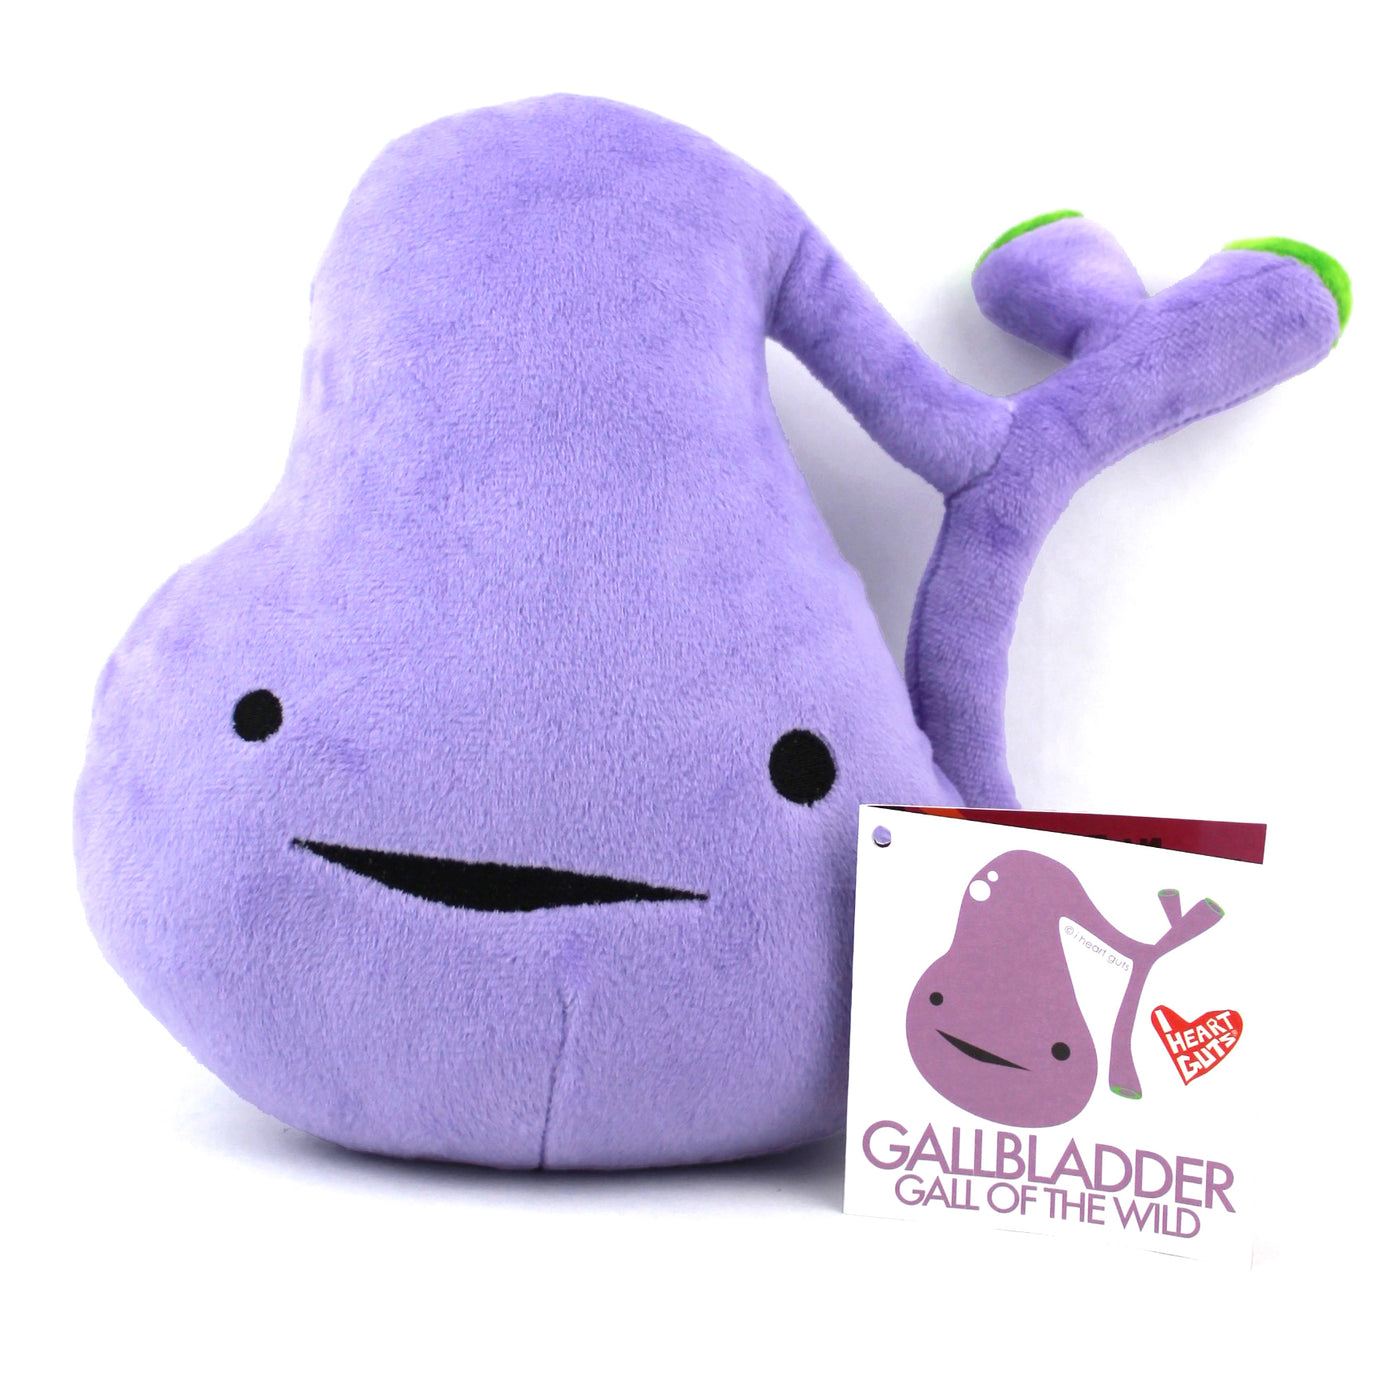 Gallbladder Plush - You've Got Gall! - Plush Organ Stuffed Toy Pillow - I Heart Guts